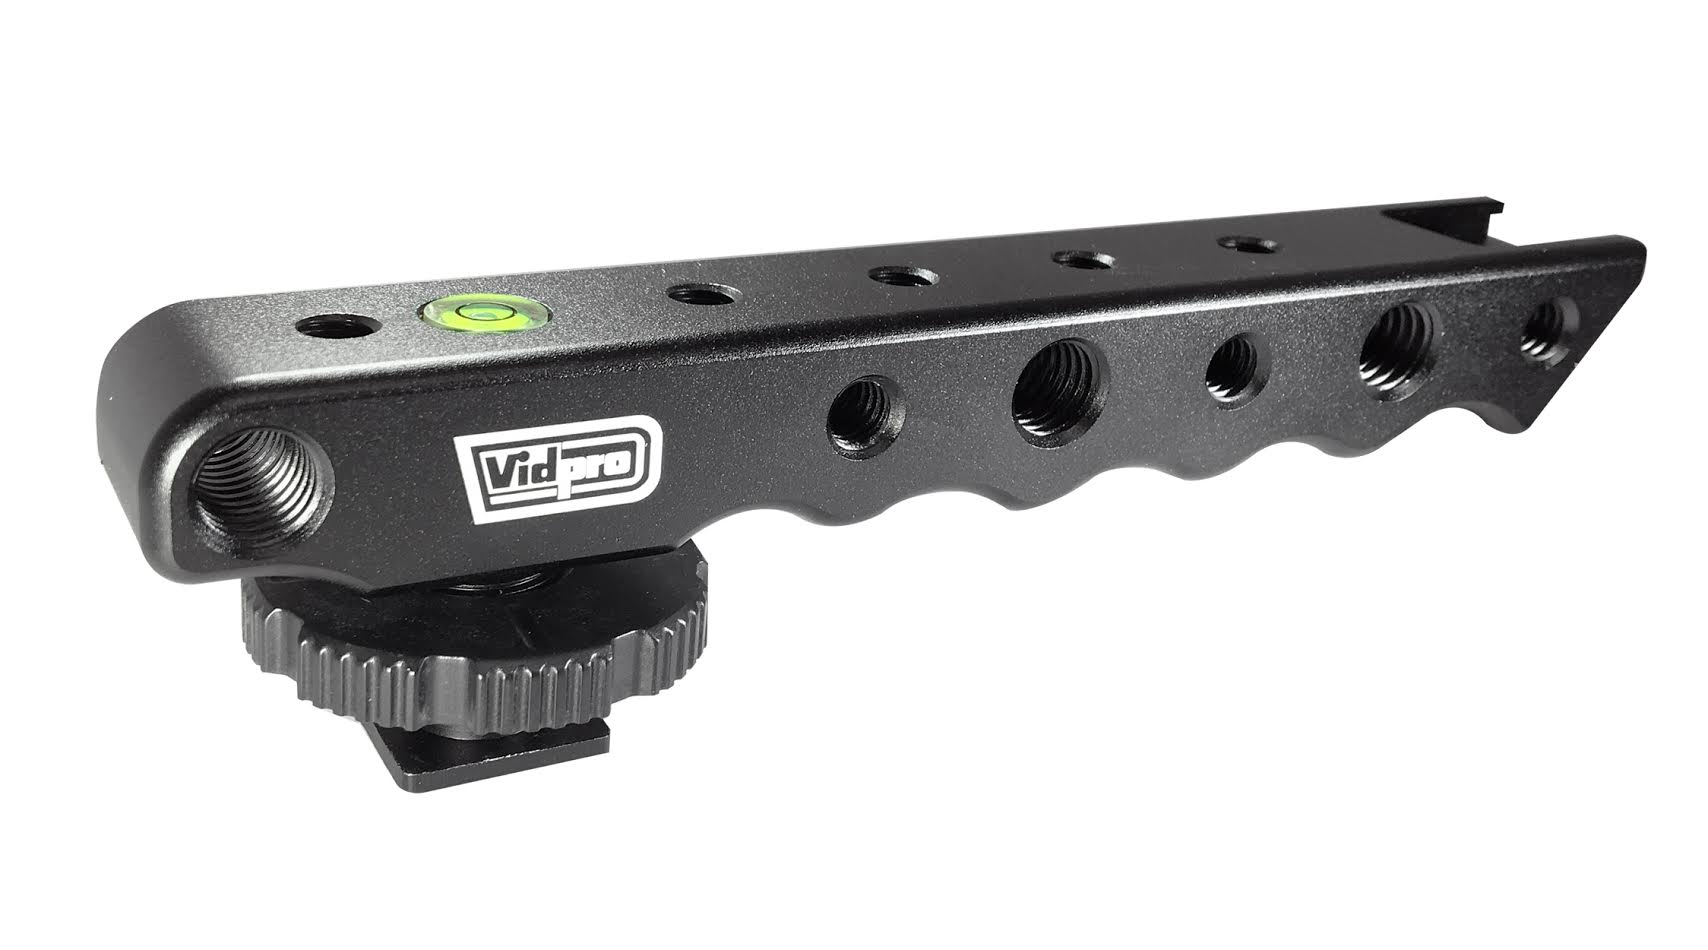 Video Stabilizers for OlympusDigital Camera